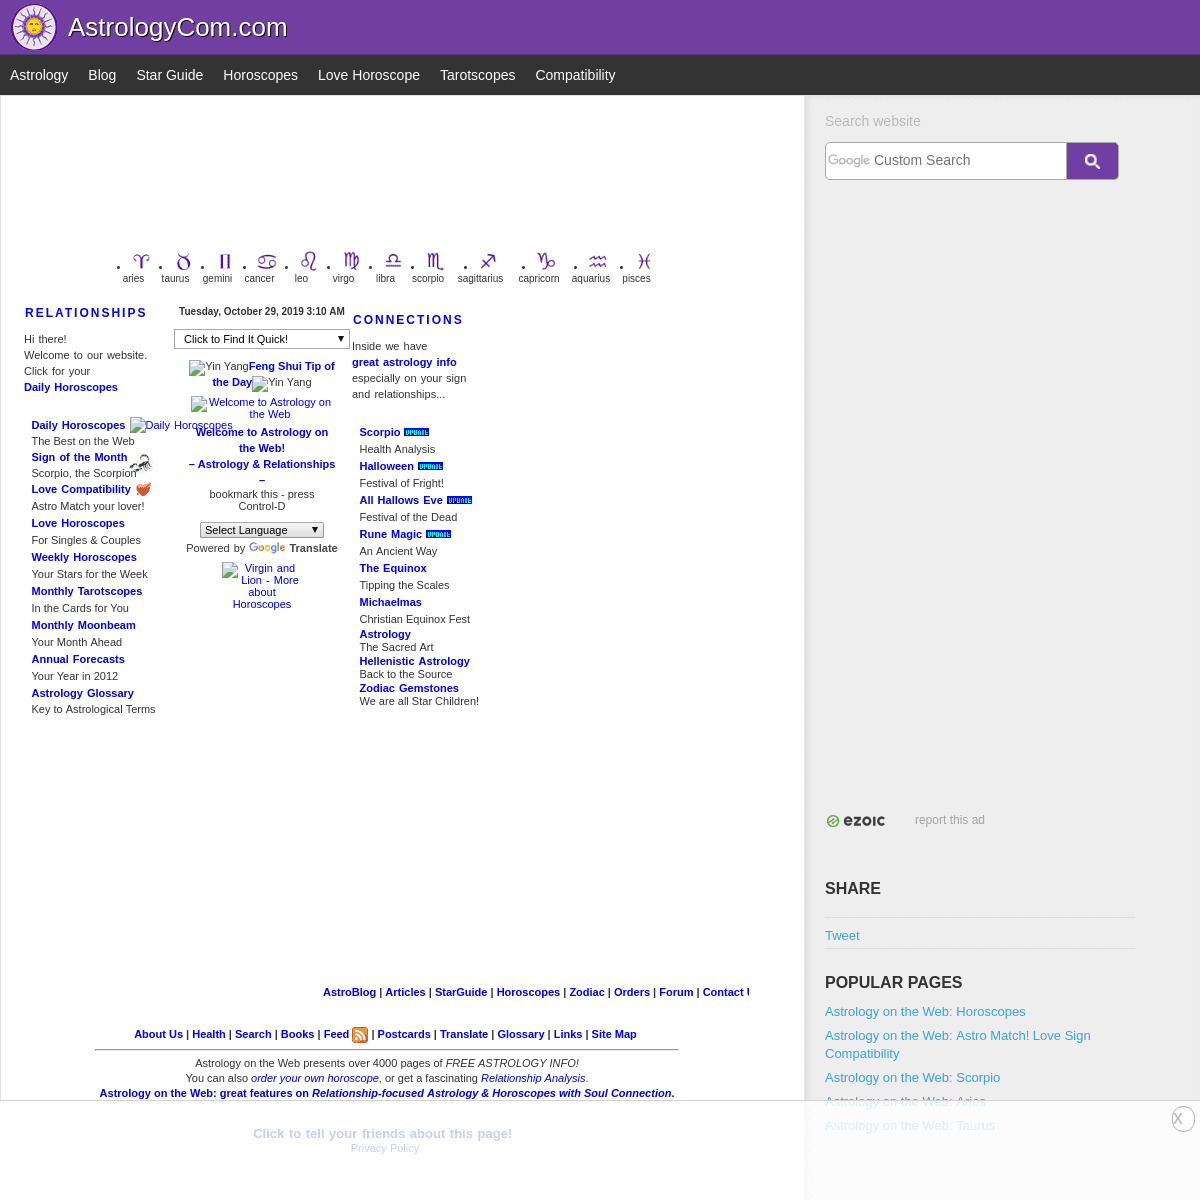 A complete backup of astrologycom.com